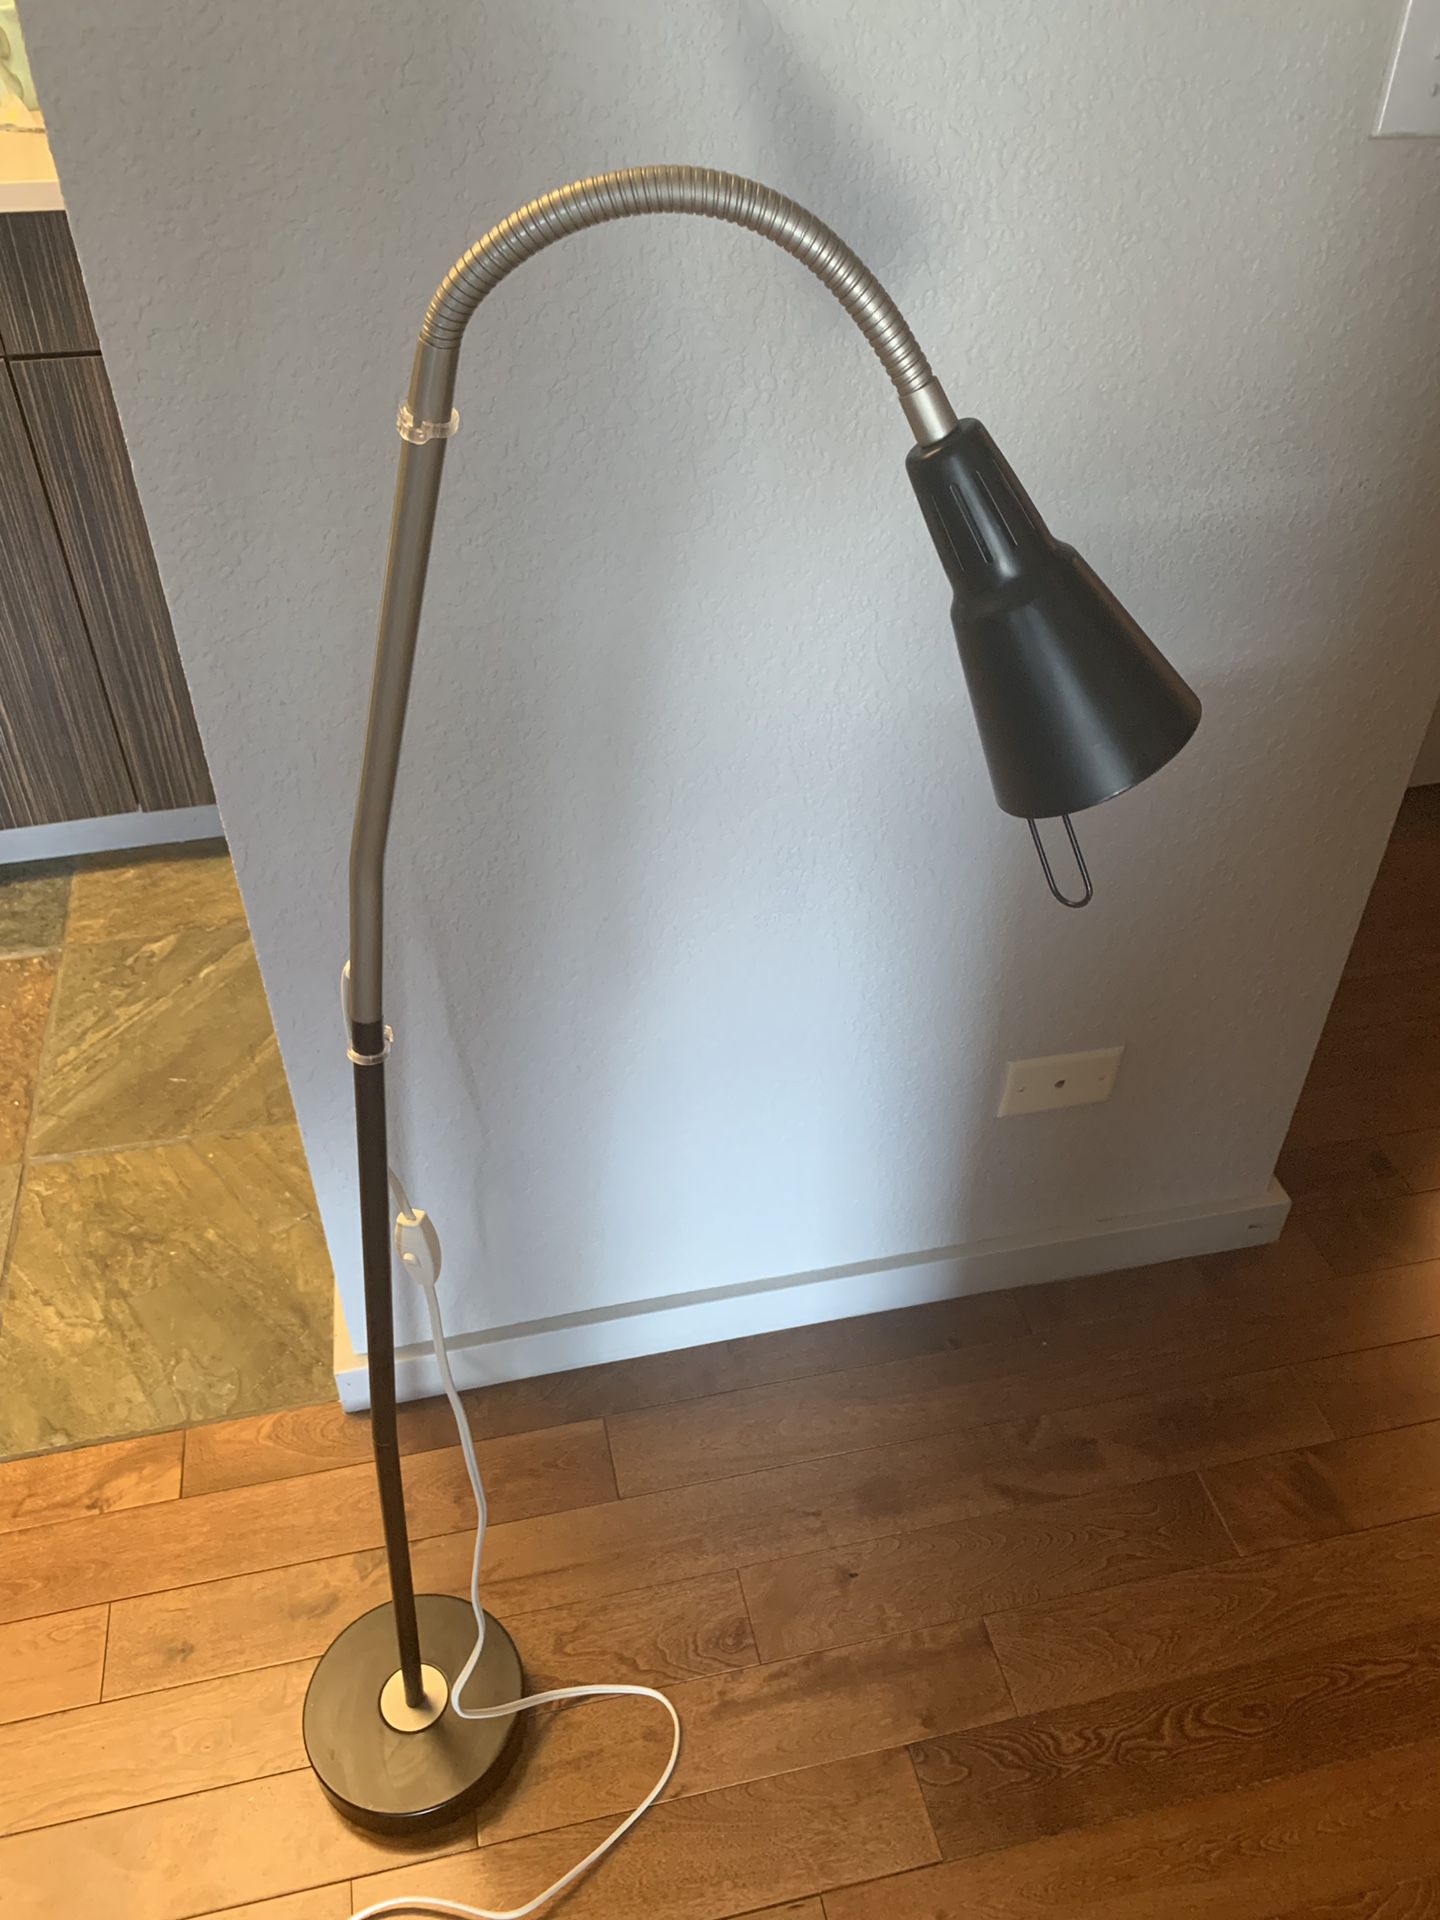 Ikea Tall Floor Lamp with an adjustable neck